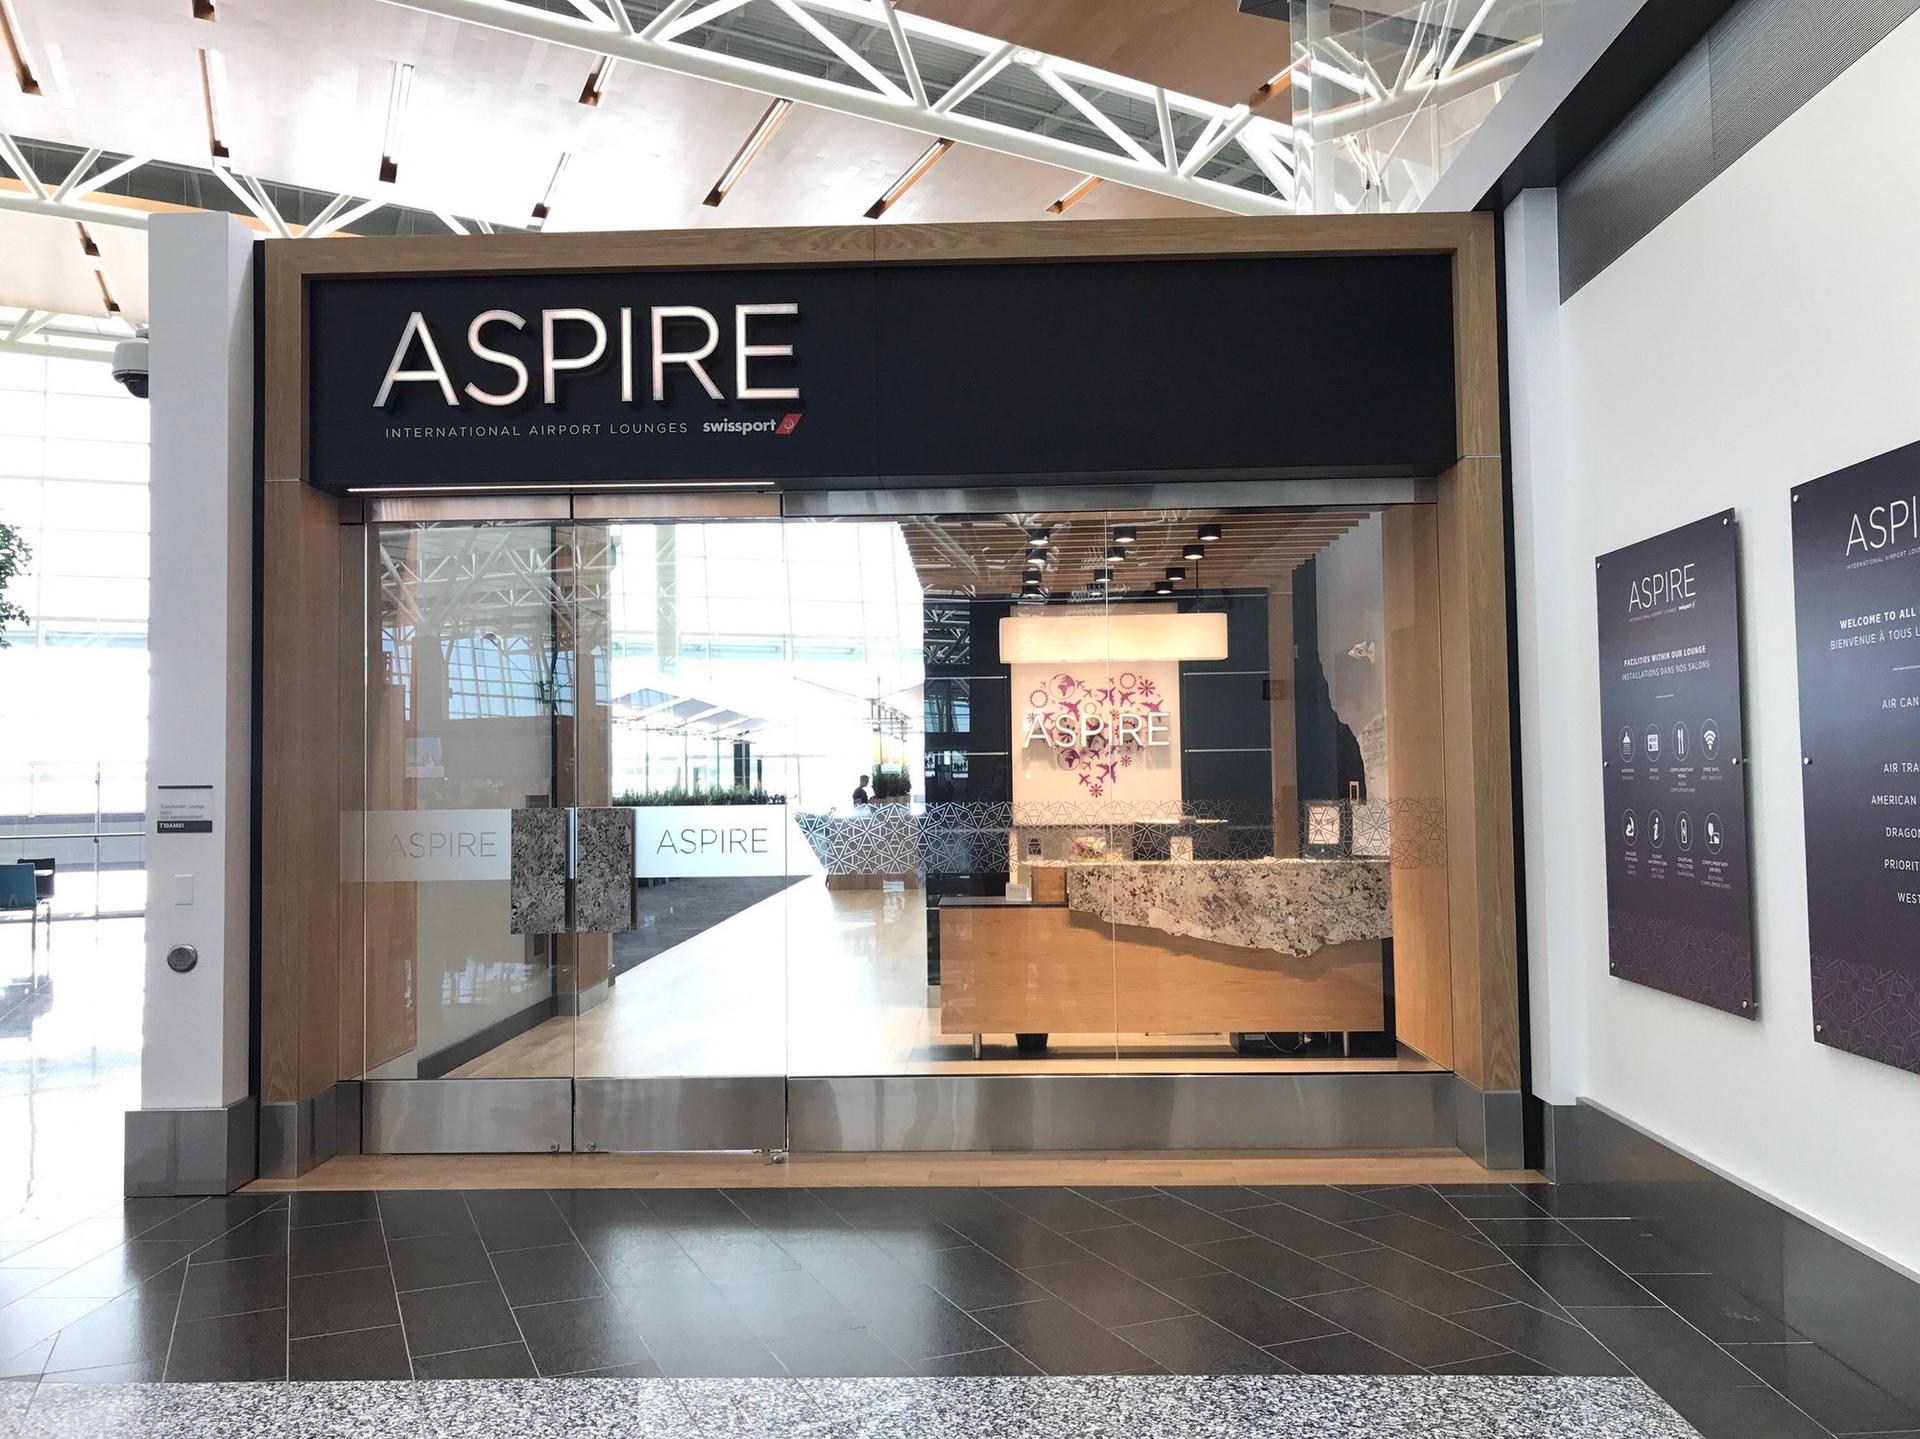 Aspire Lounge (Transborder) image 3 of 22